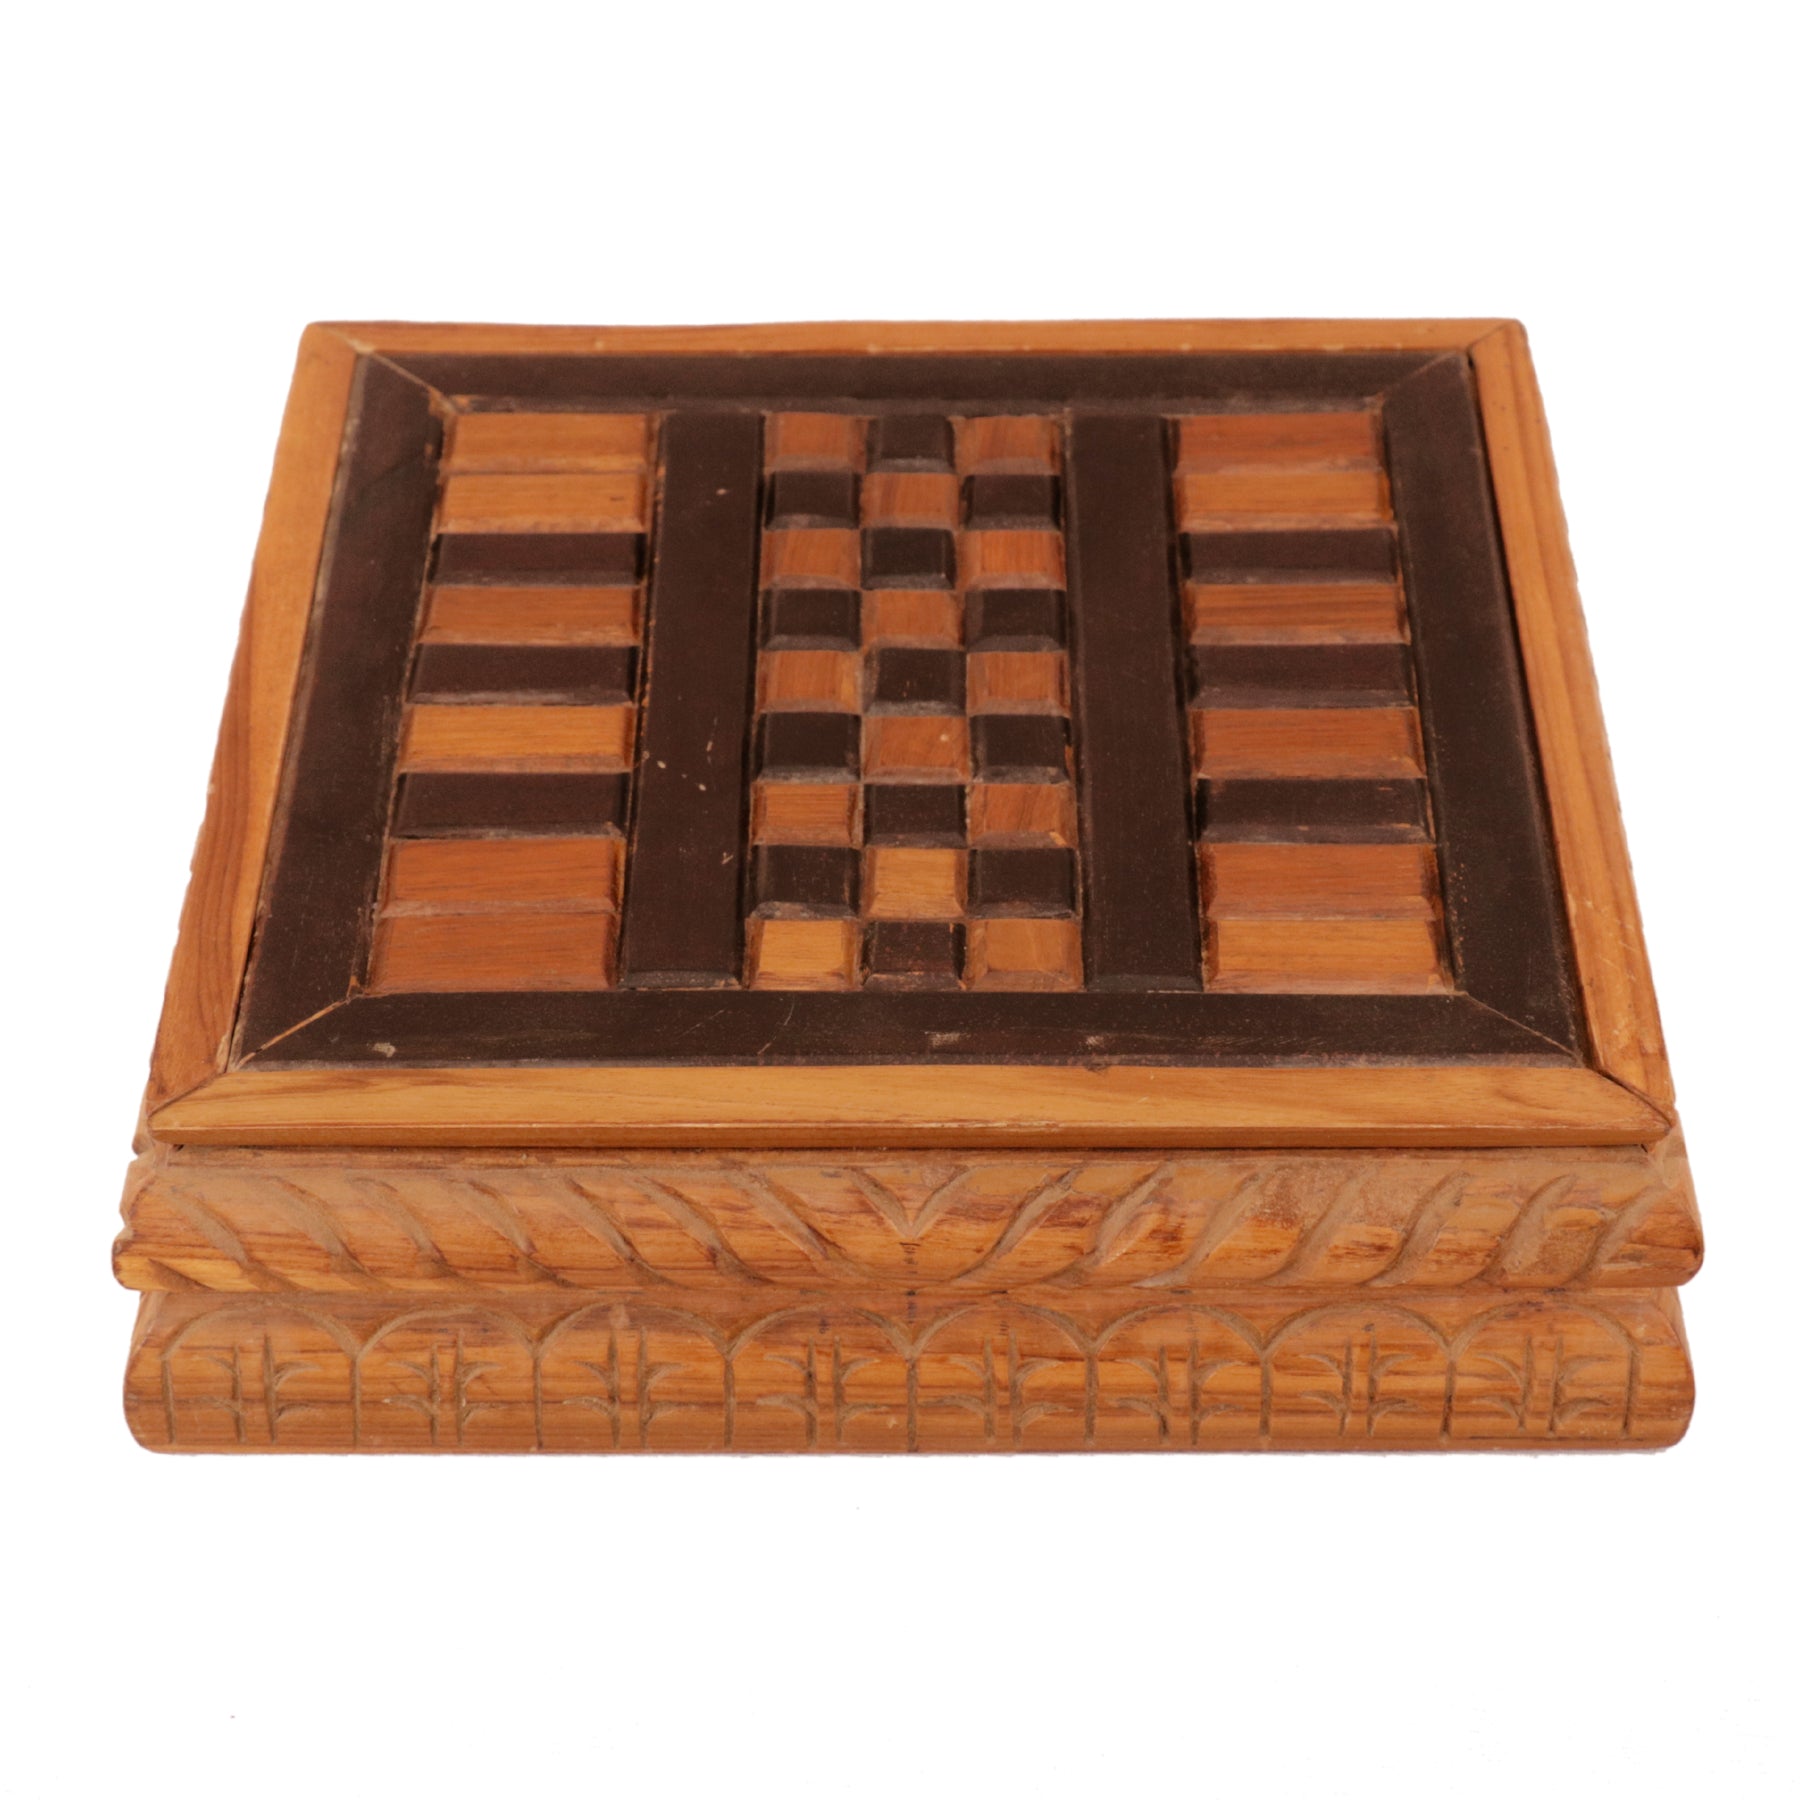 Chessboard Panel Box Wooden Box